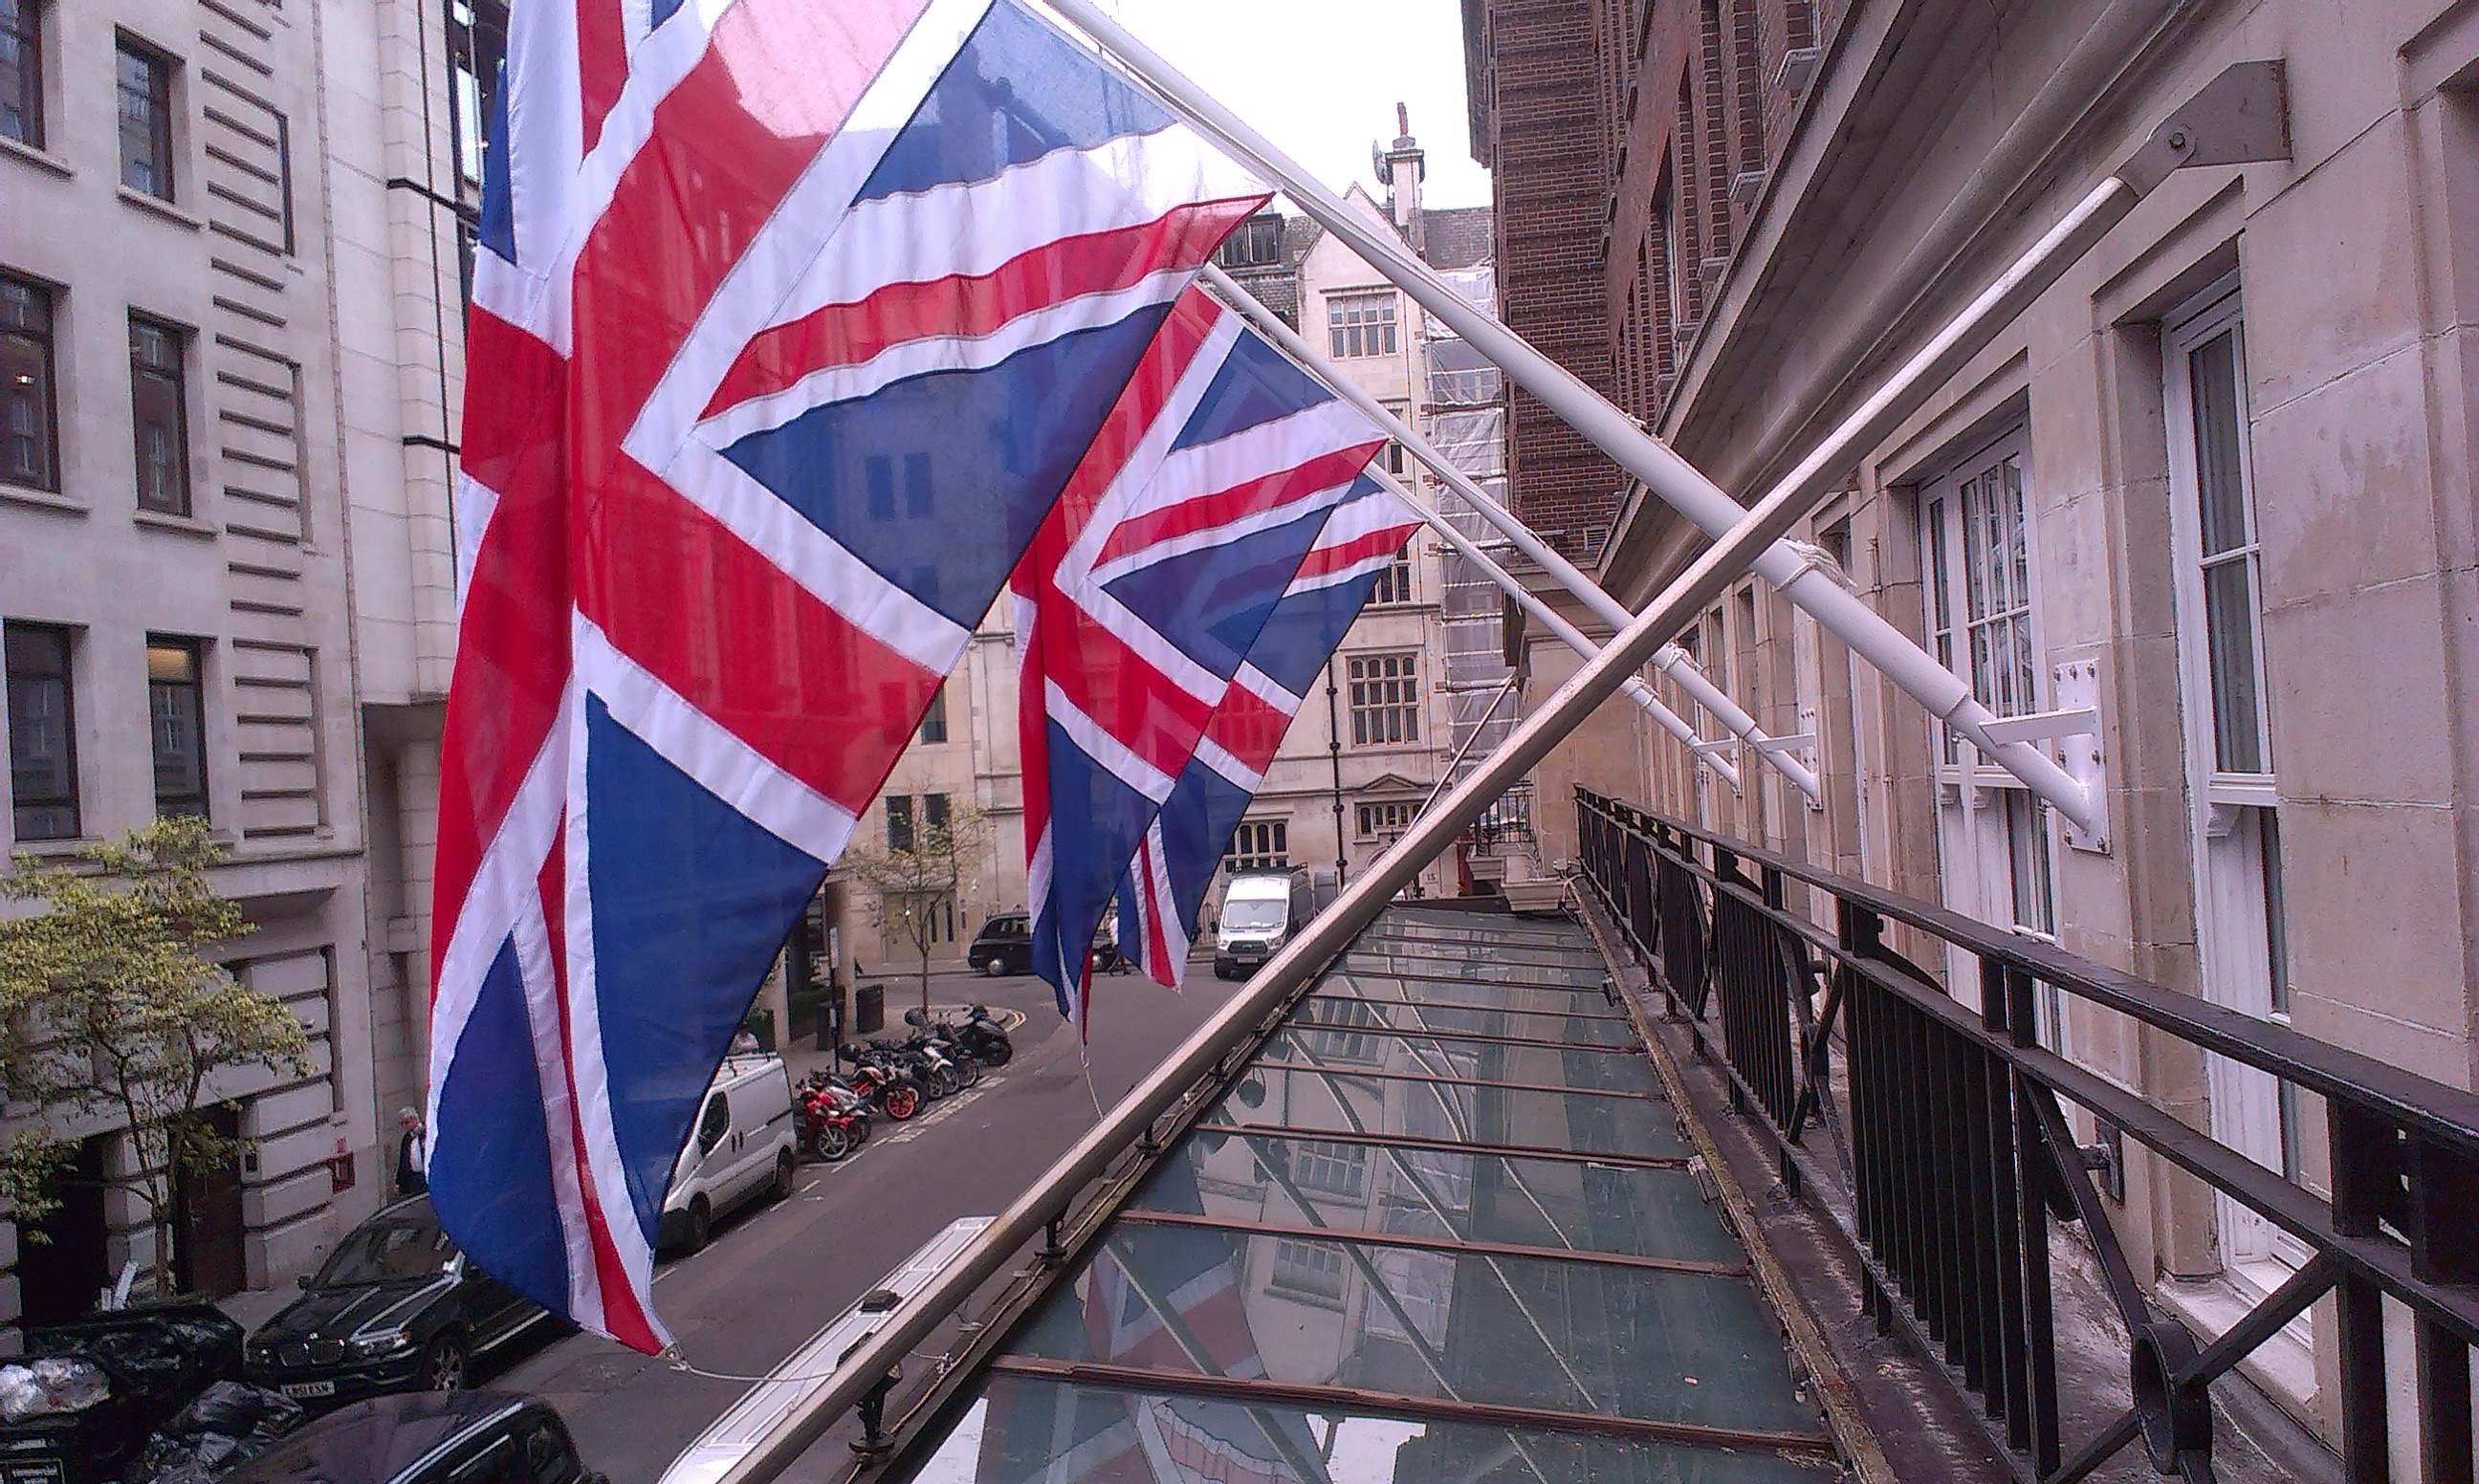 Radisson Hotel Mayfair Flagpole Installation